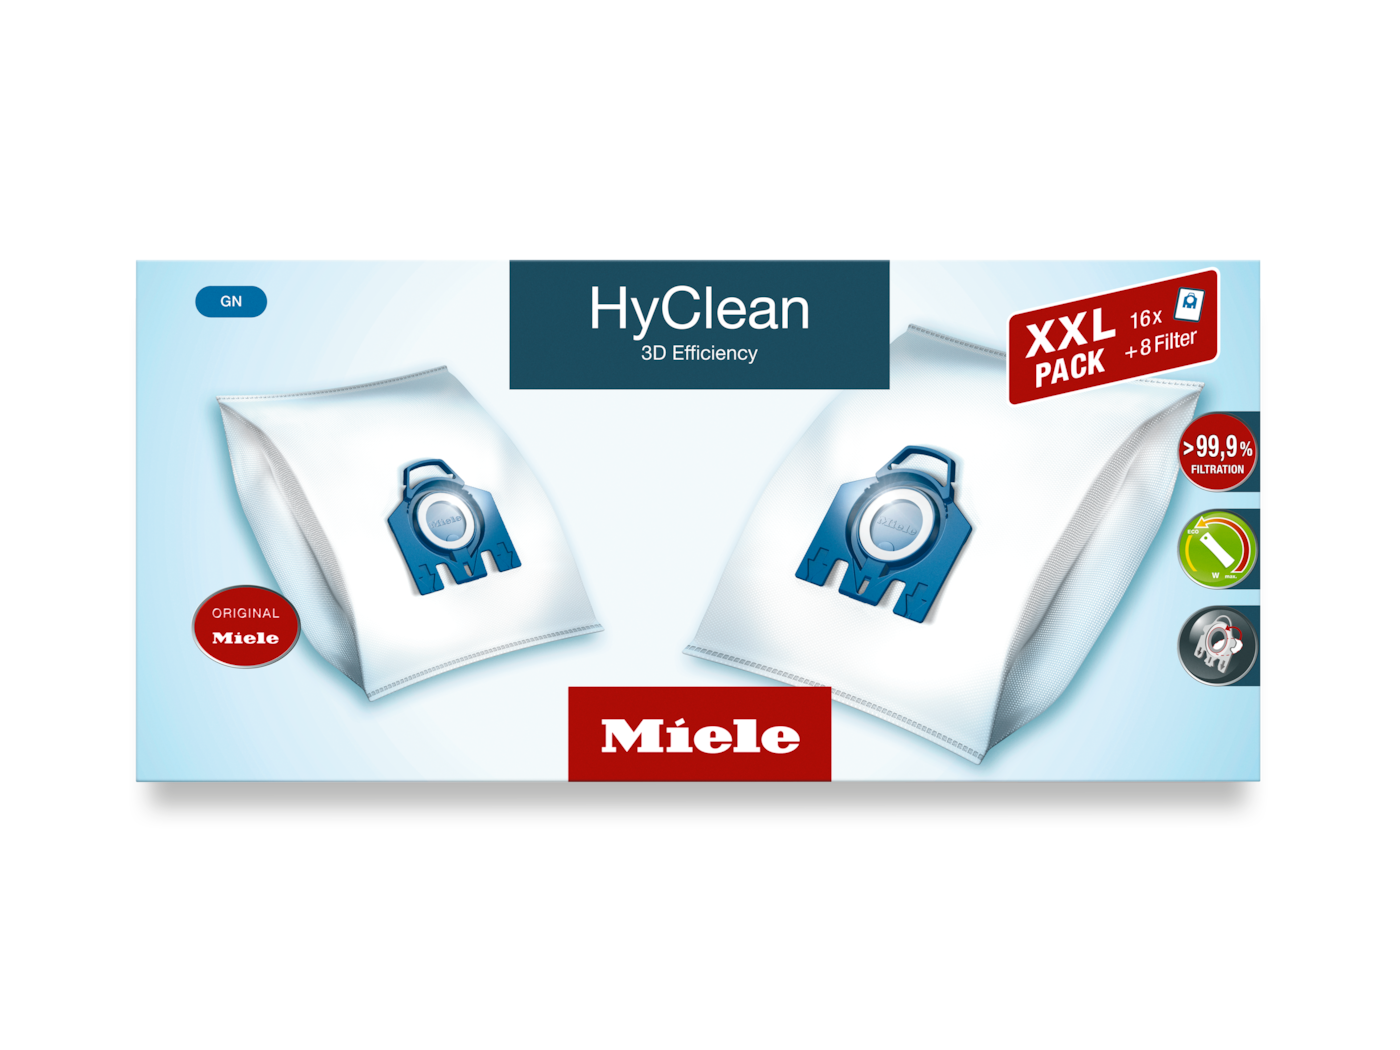 GN XXL HyClean 3D - Pack XXL HyClean 3D Efficiency GN 